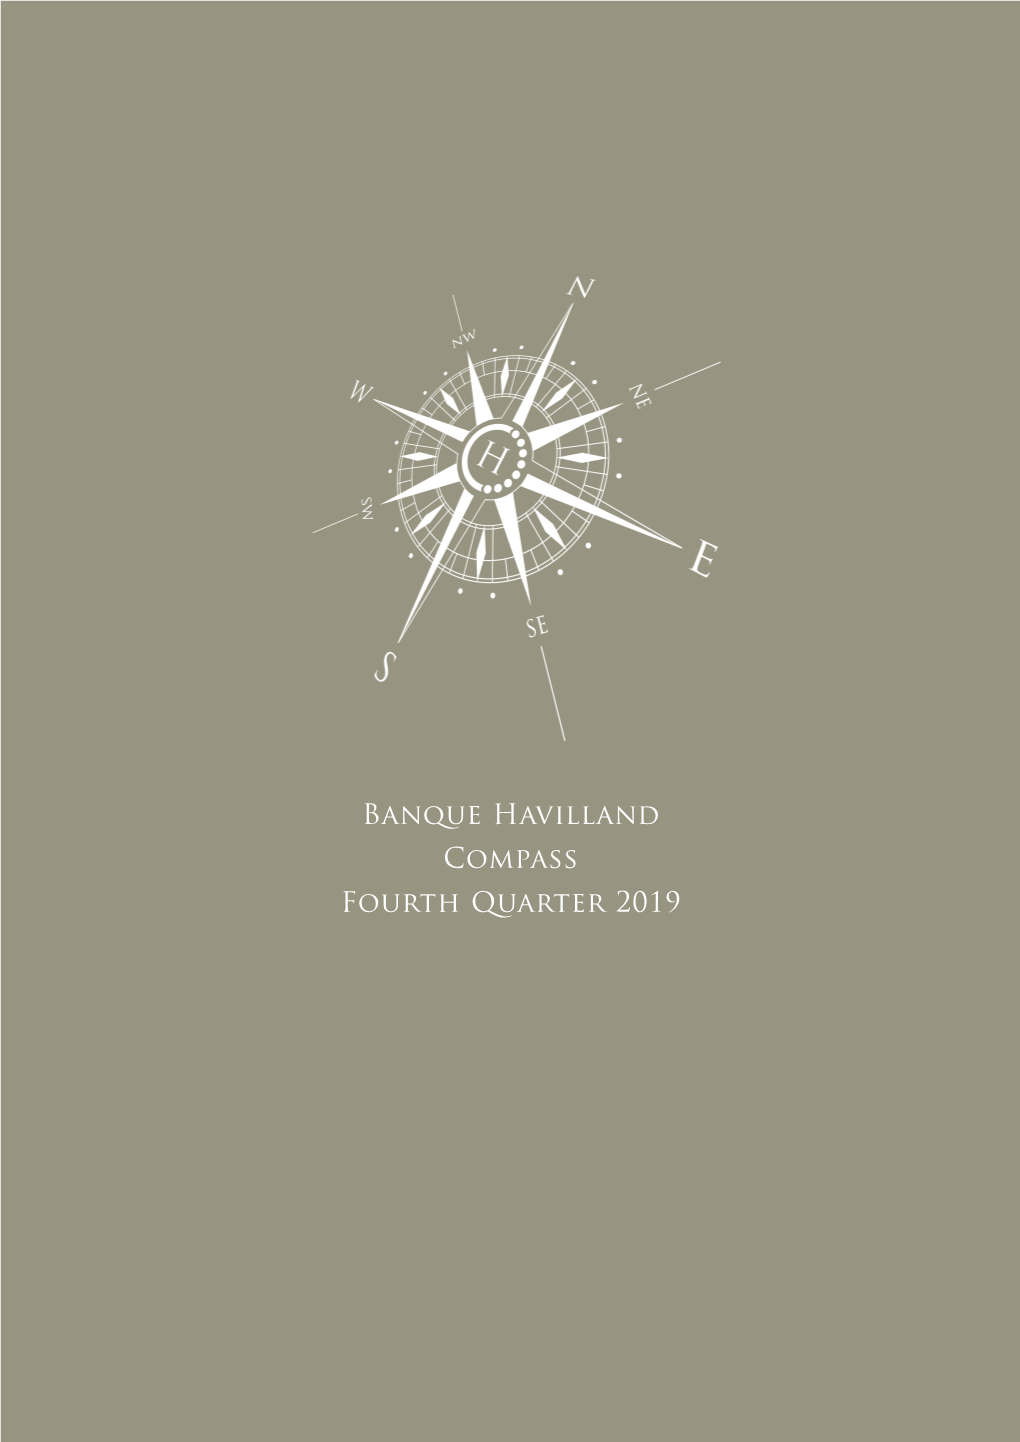 Banque Havilland Compass Fourth Quarter 2019 Contents